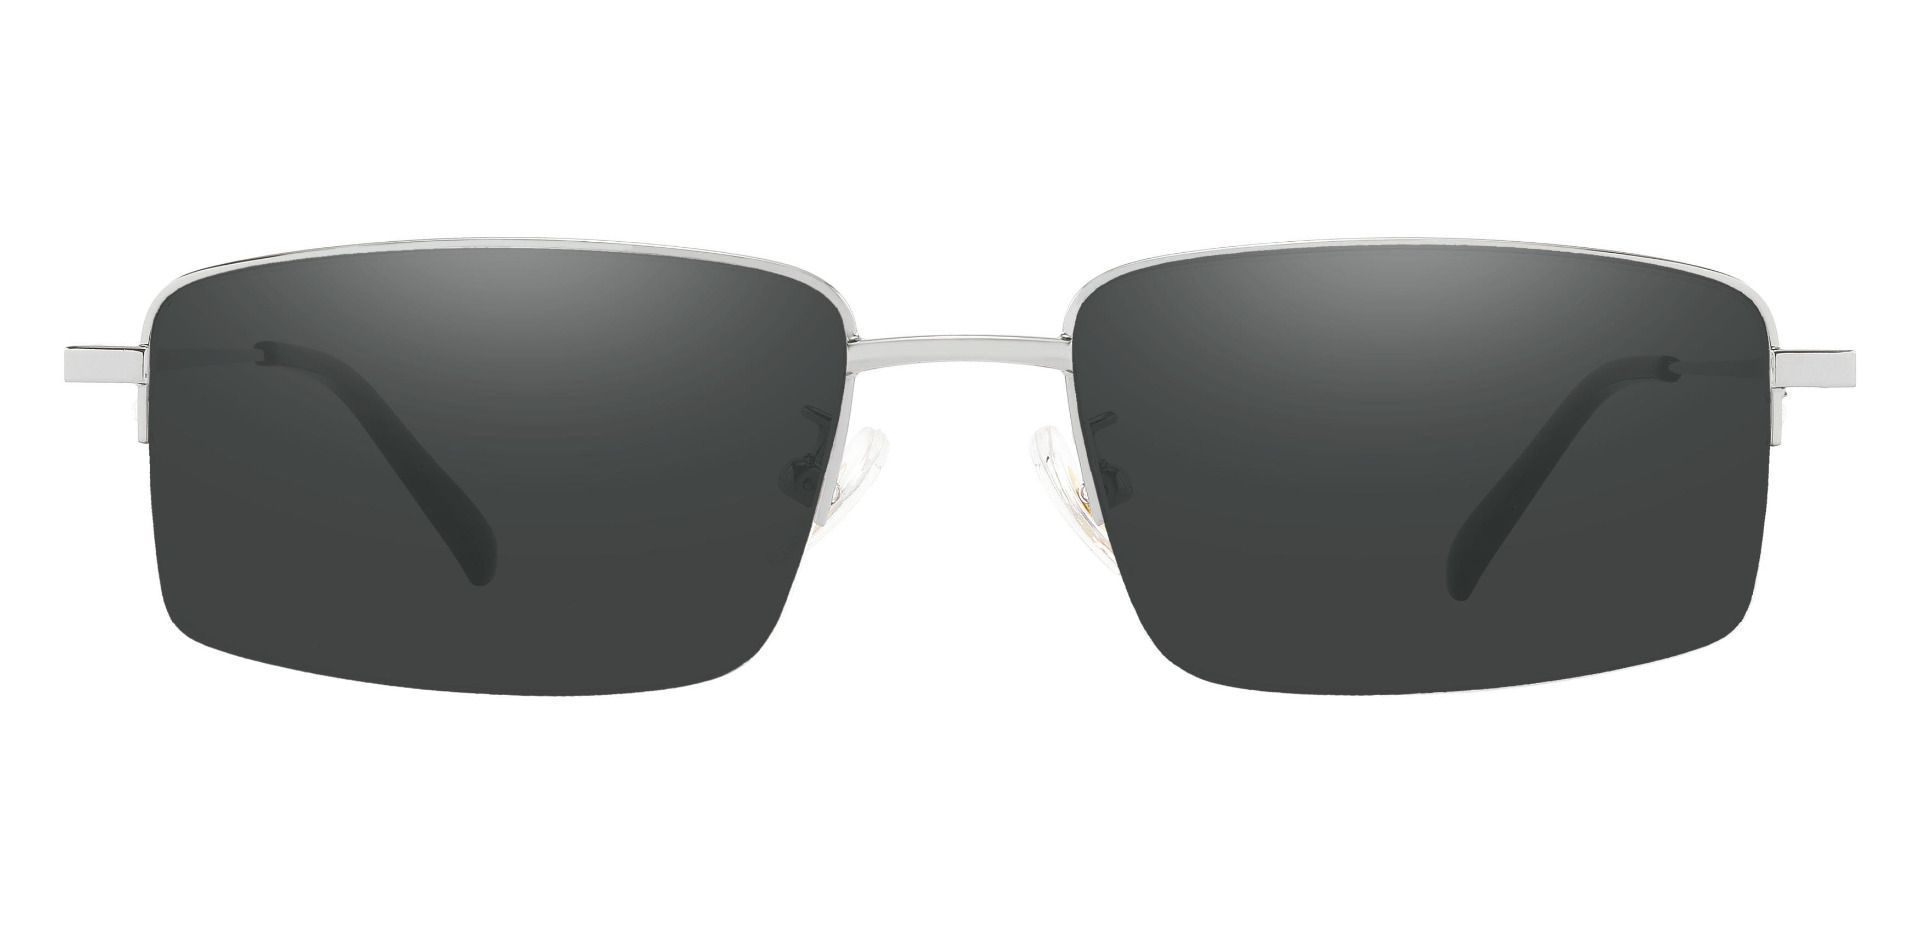 Wayne Rectangle Prescription Sunglasses - Silver Frame With Gray Lenses